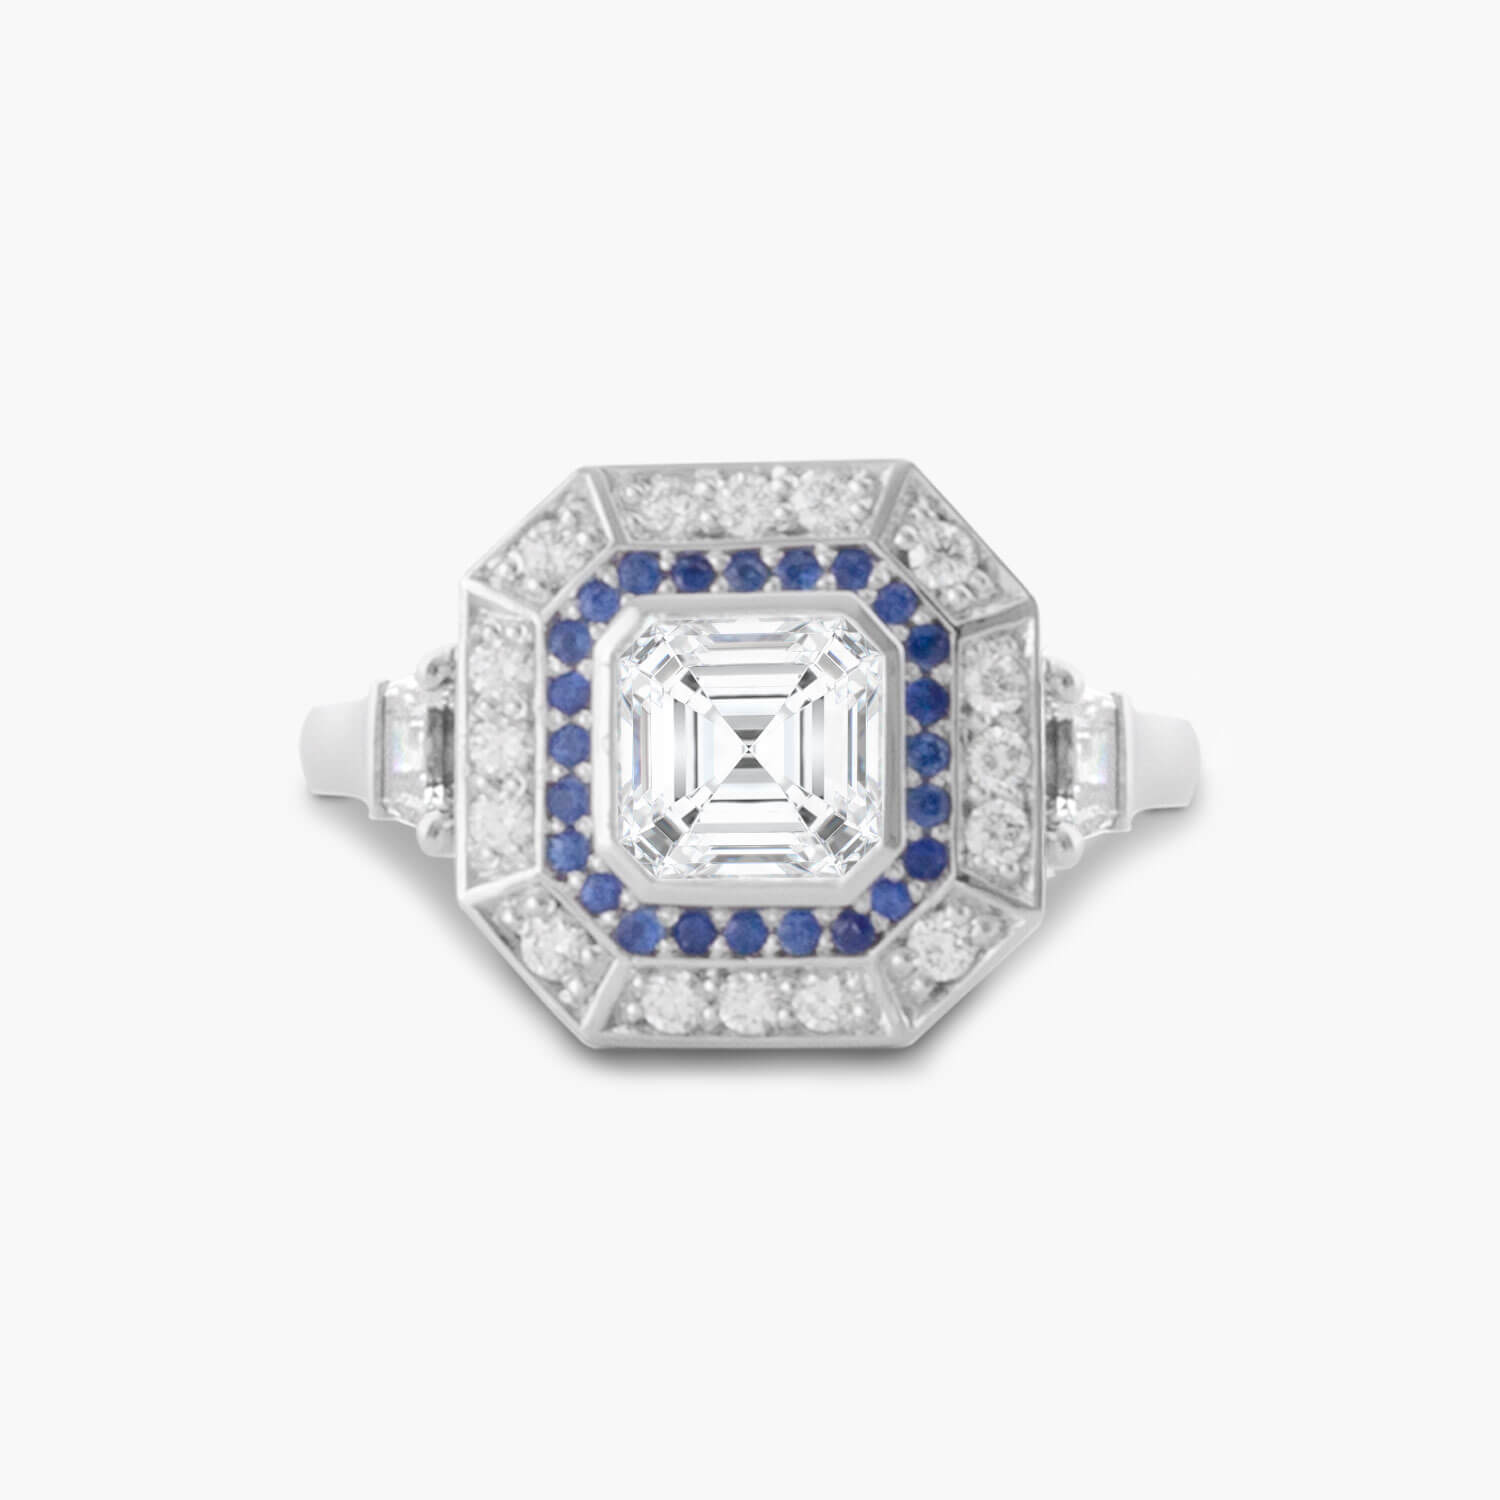 Ben’s Bespoke Diamond and Sapphire Engagement Ring